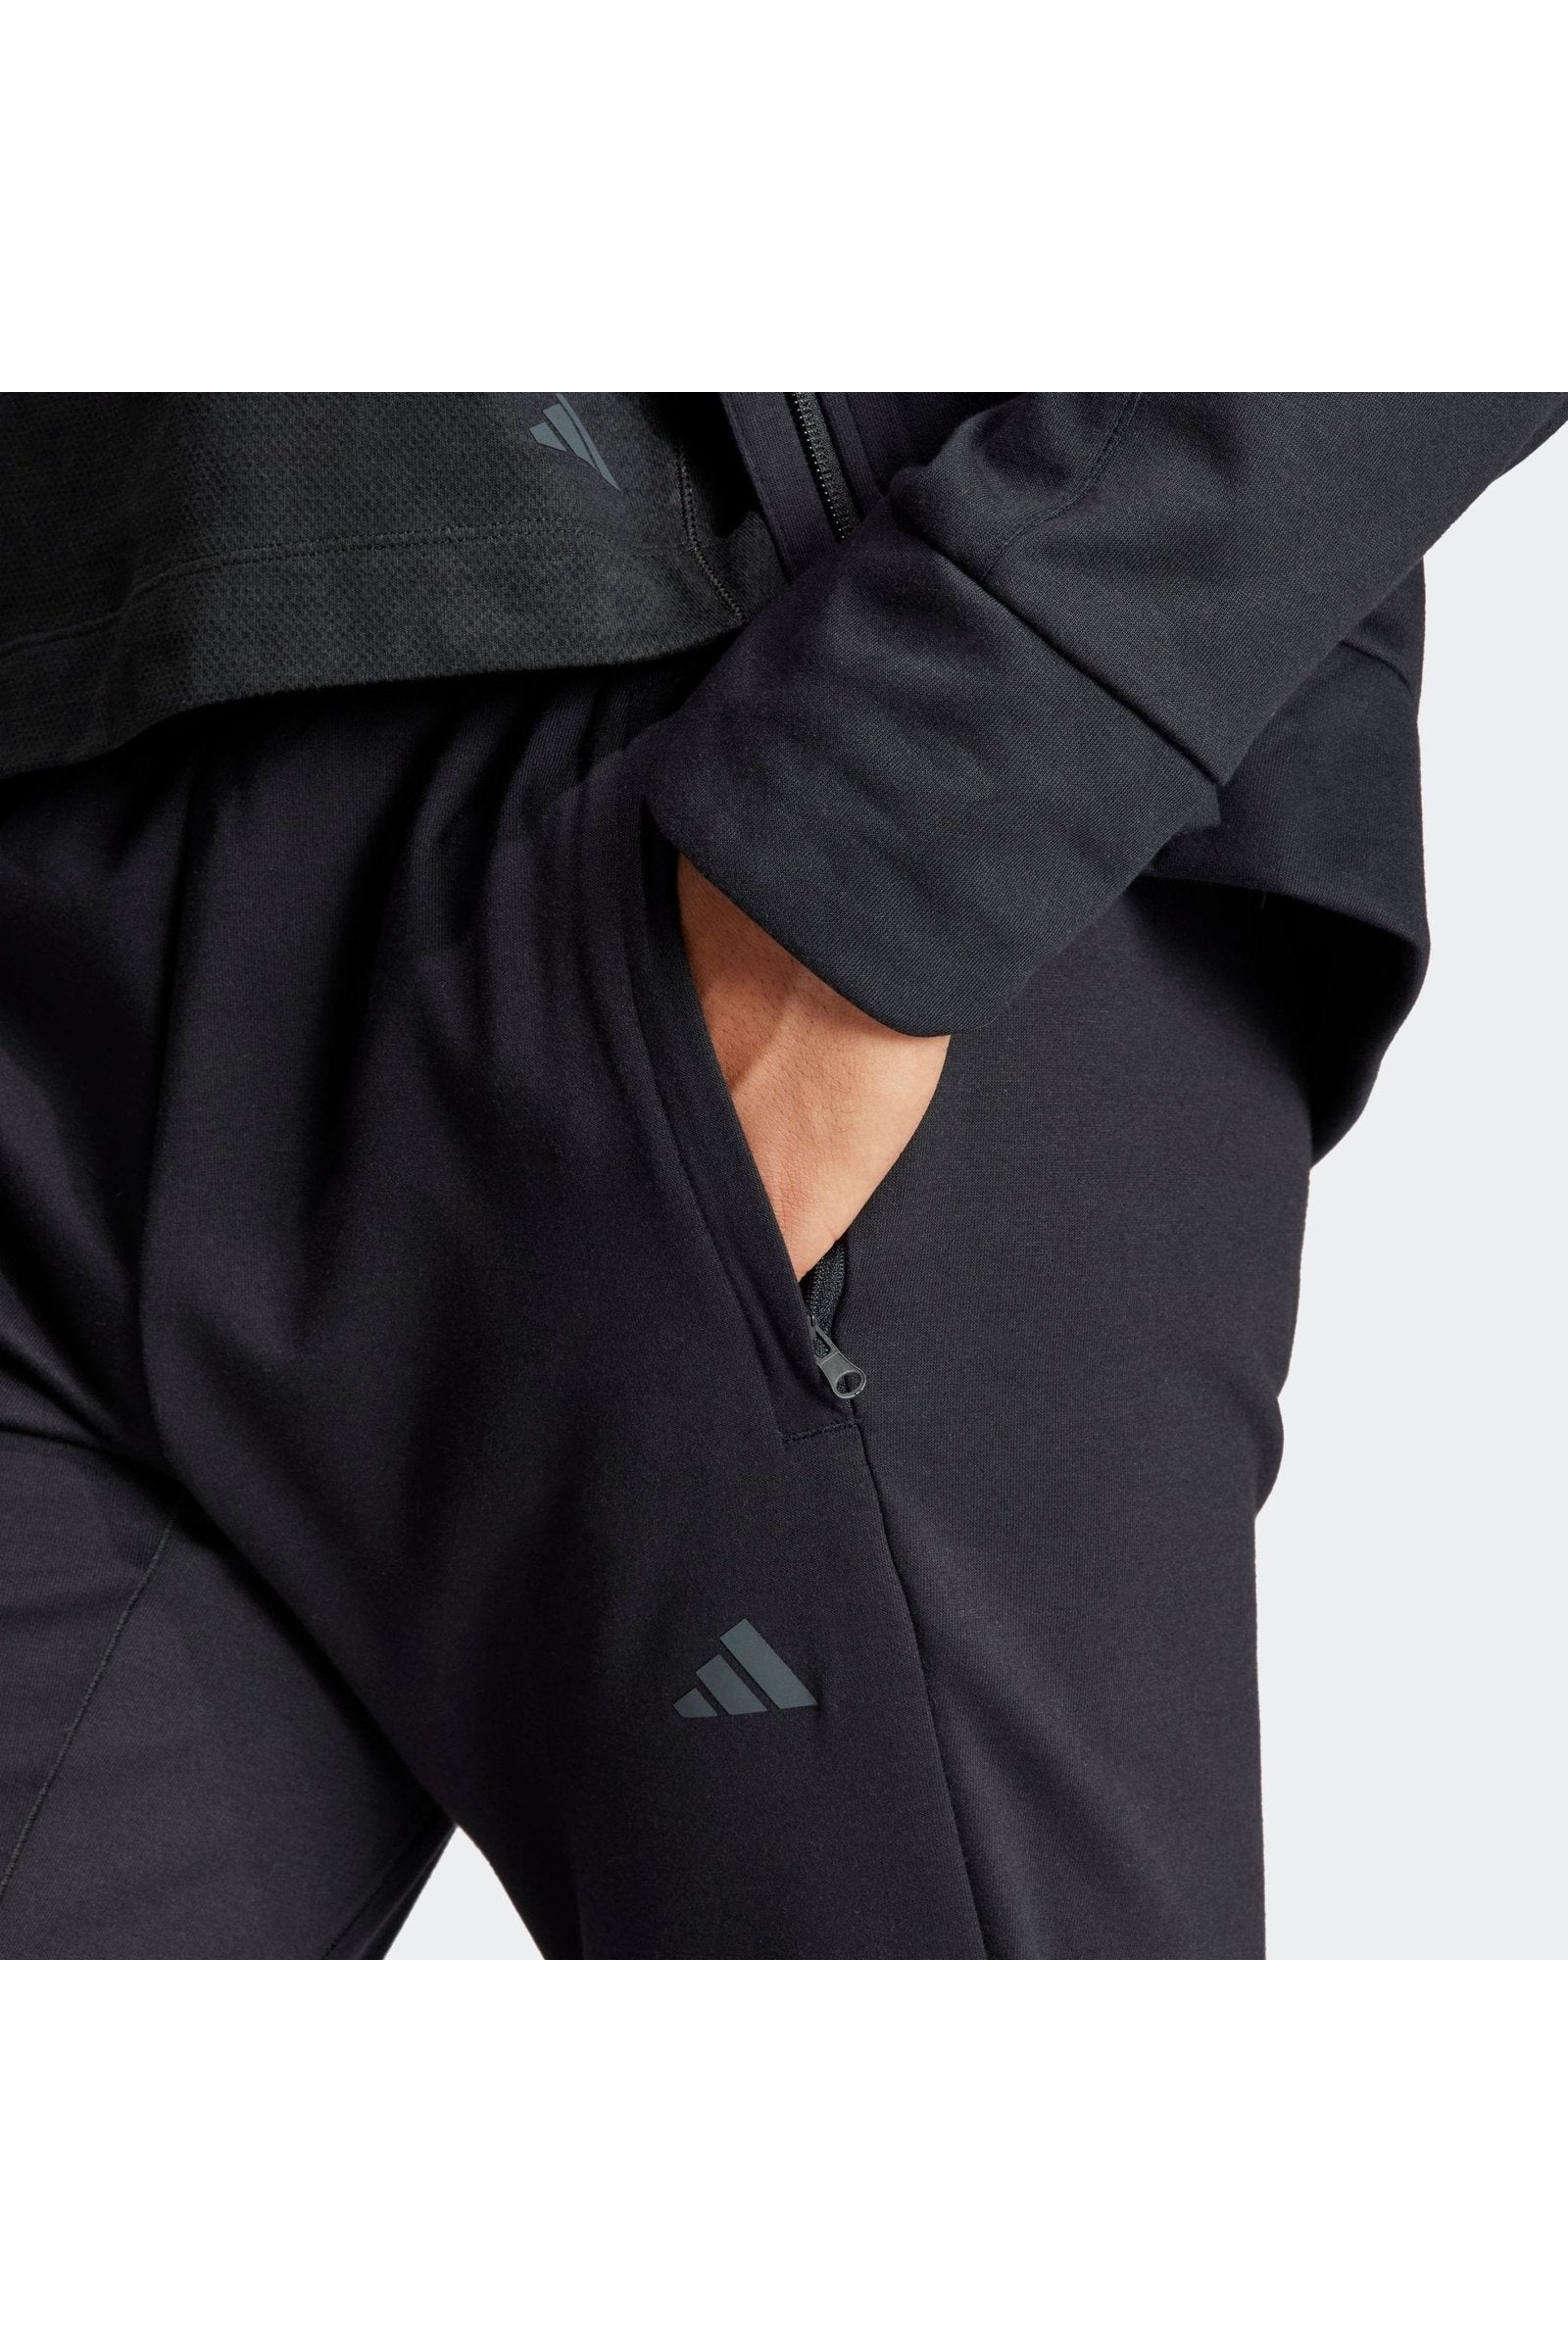 ADIDAS - מכנסיים ארוכים לגברים YOGA TRAINING 7/8 בצבע שחור - MASHBIR//365